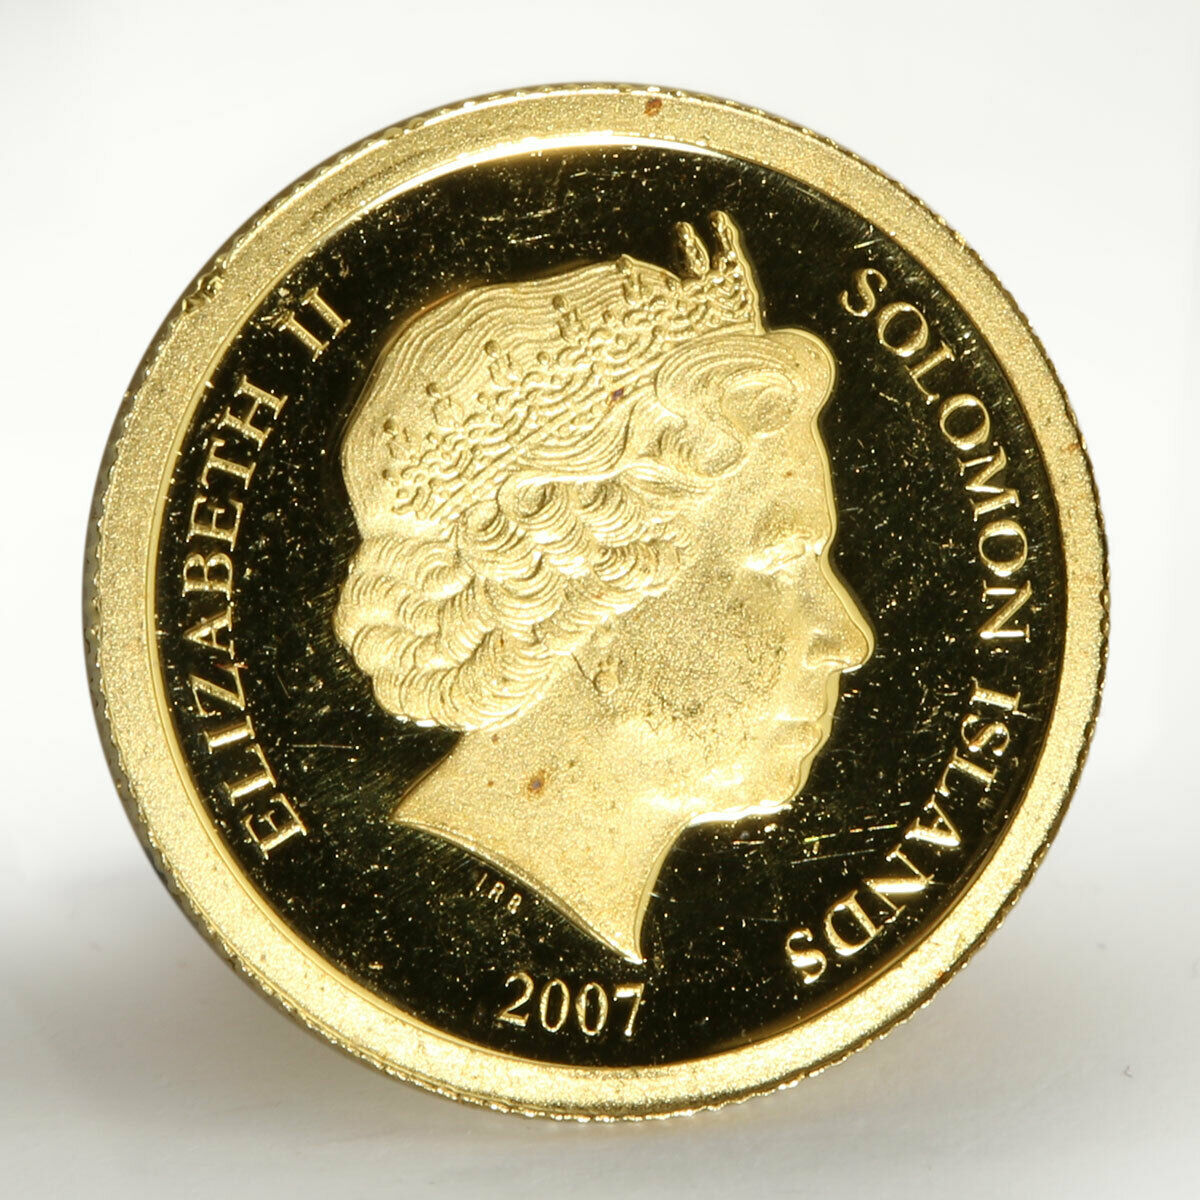 Solomon Islands 10 dollars Taj Mahal - India proof gold coin 2007